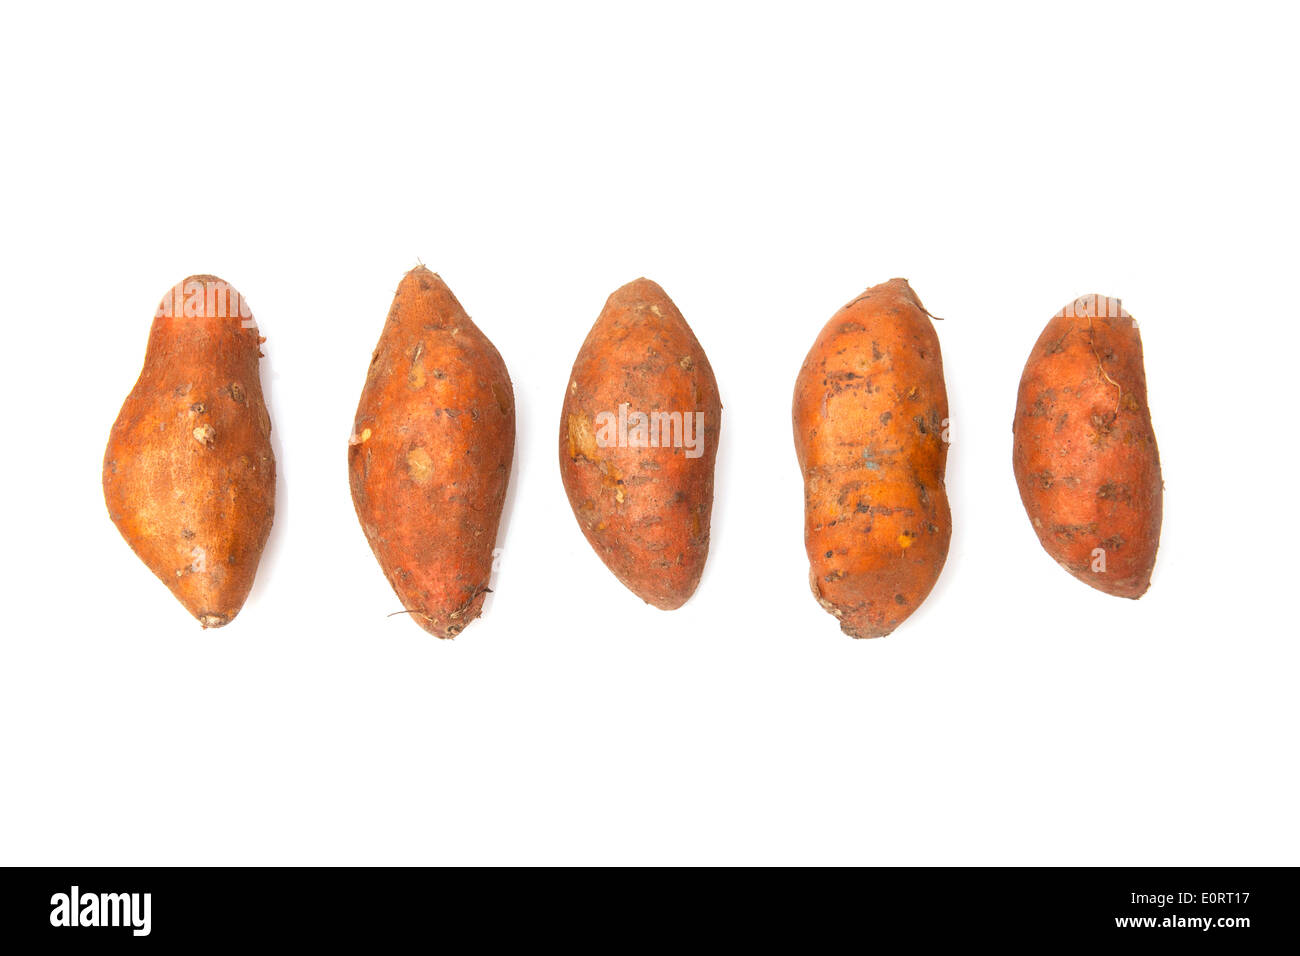 Sweet Potatoes isolated on a white studio background. Stock Photo